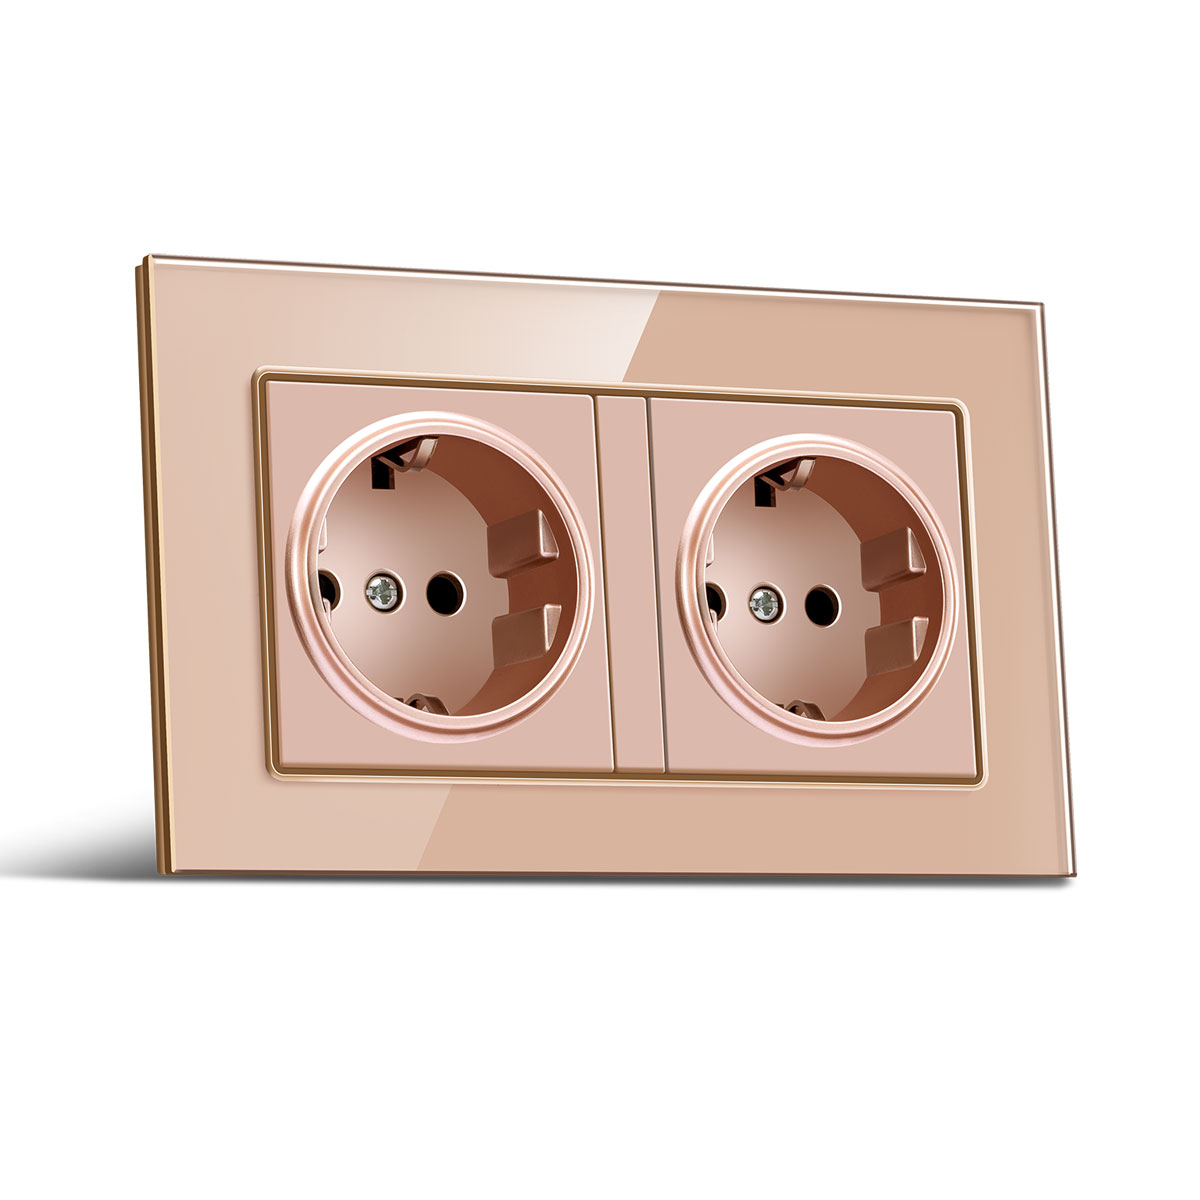 BONDA-Socket-Switch-8686-PC-Glass-Panel-Eu-German-France-Plug-Wall-Socket-Smart-Home-Series-Switch-1736000-5